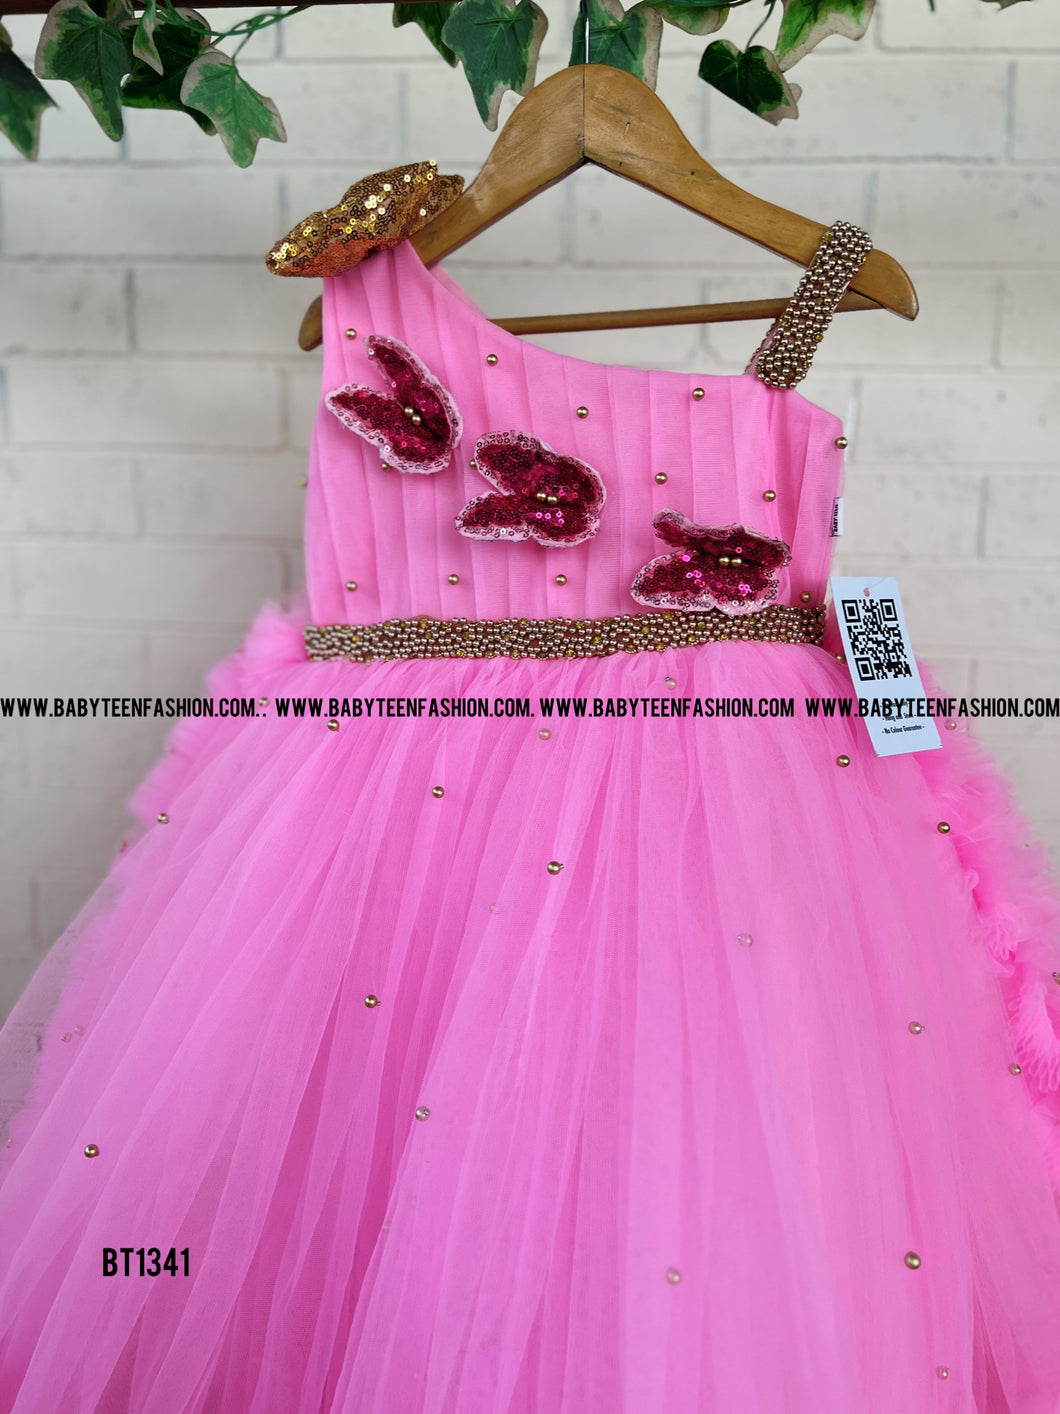 BT1341 Butterfly Theme Tail Birthday Dress